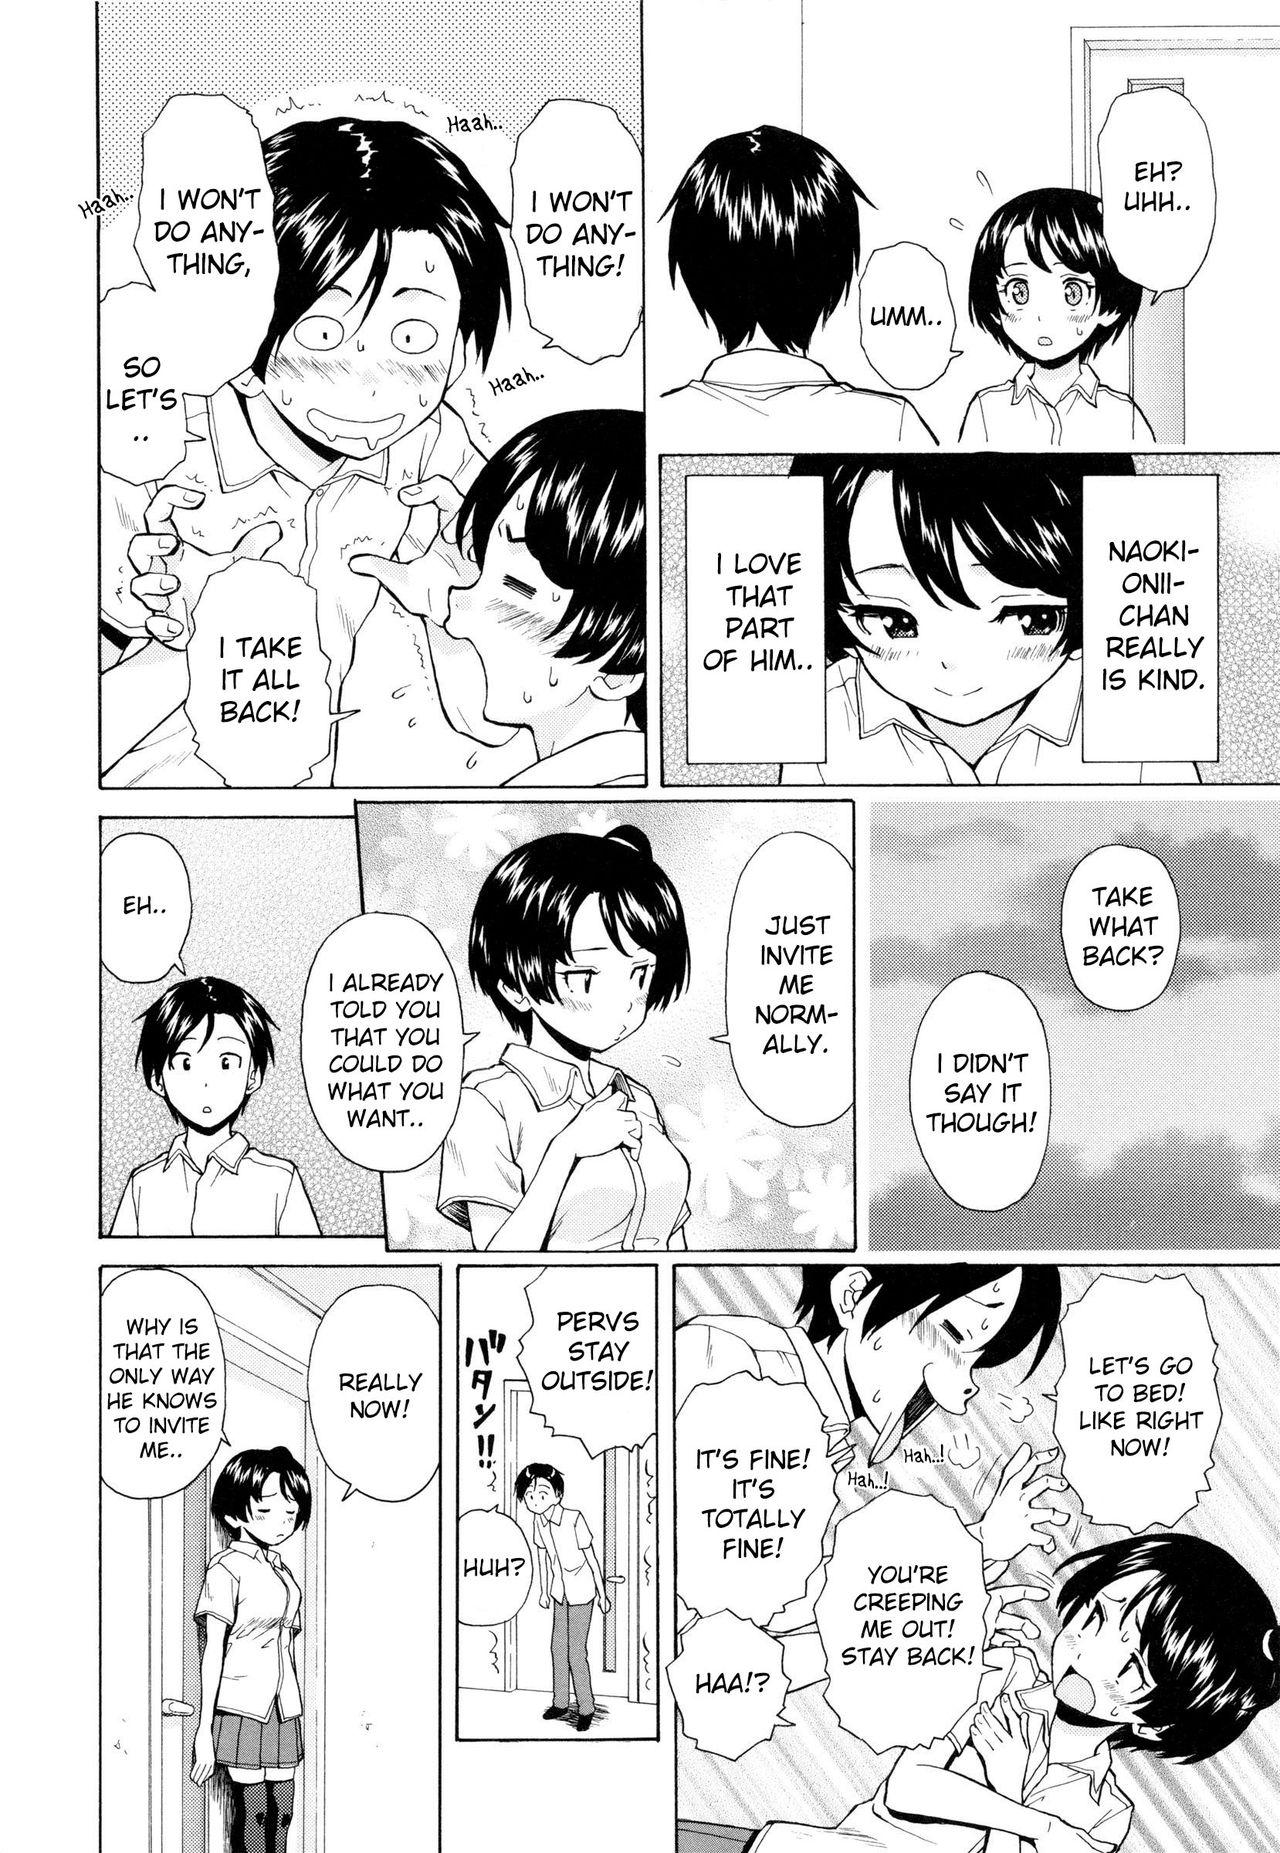 Analfuck Daisuki na Hito - Chapter 3 Breeding - Page 4